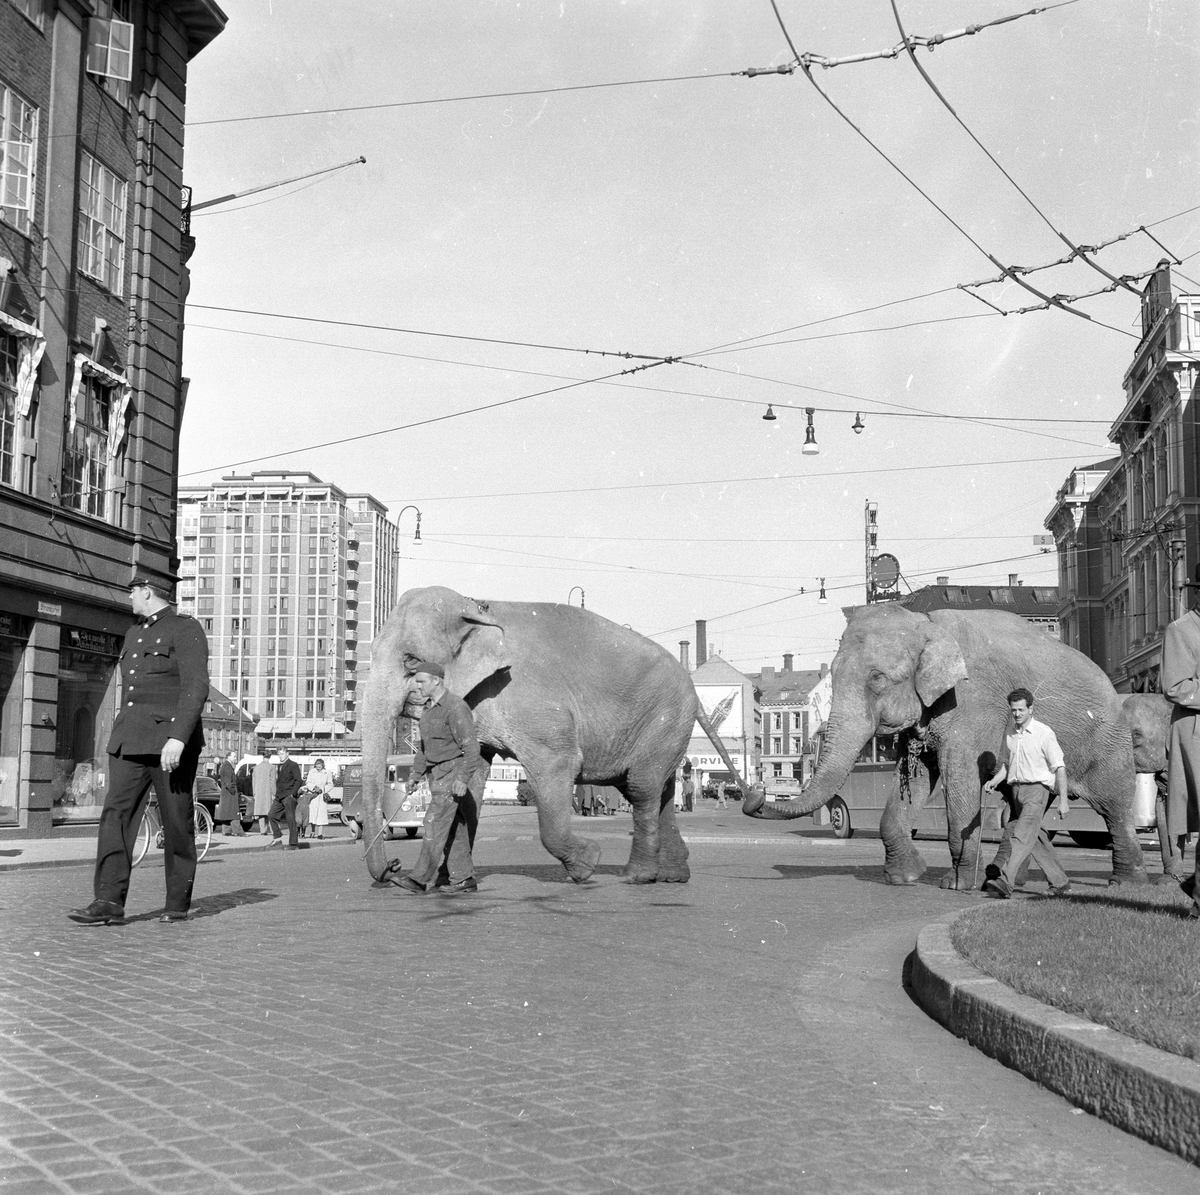 Oslo, 27.09.1954, Sirkus Zoo i Oslo, elefanter i byen.